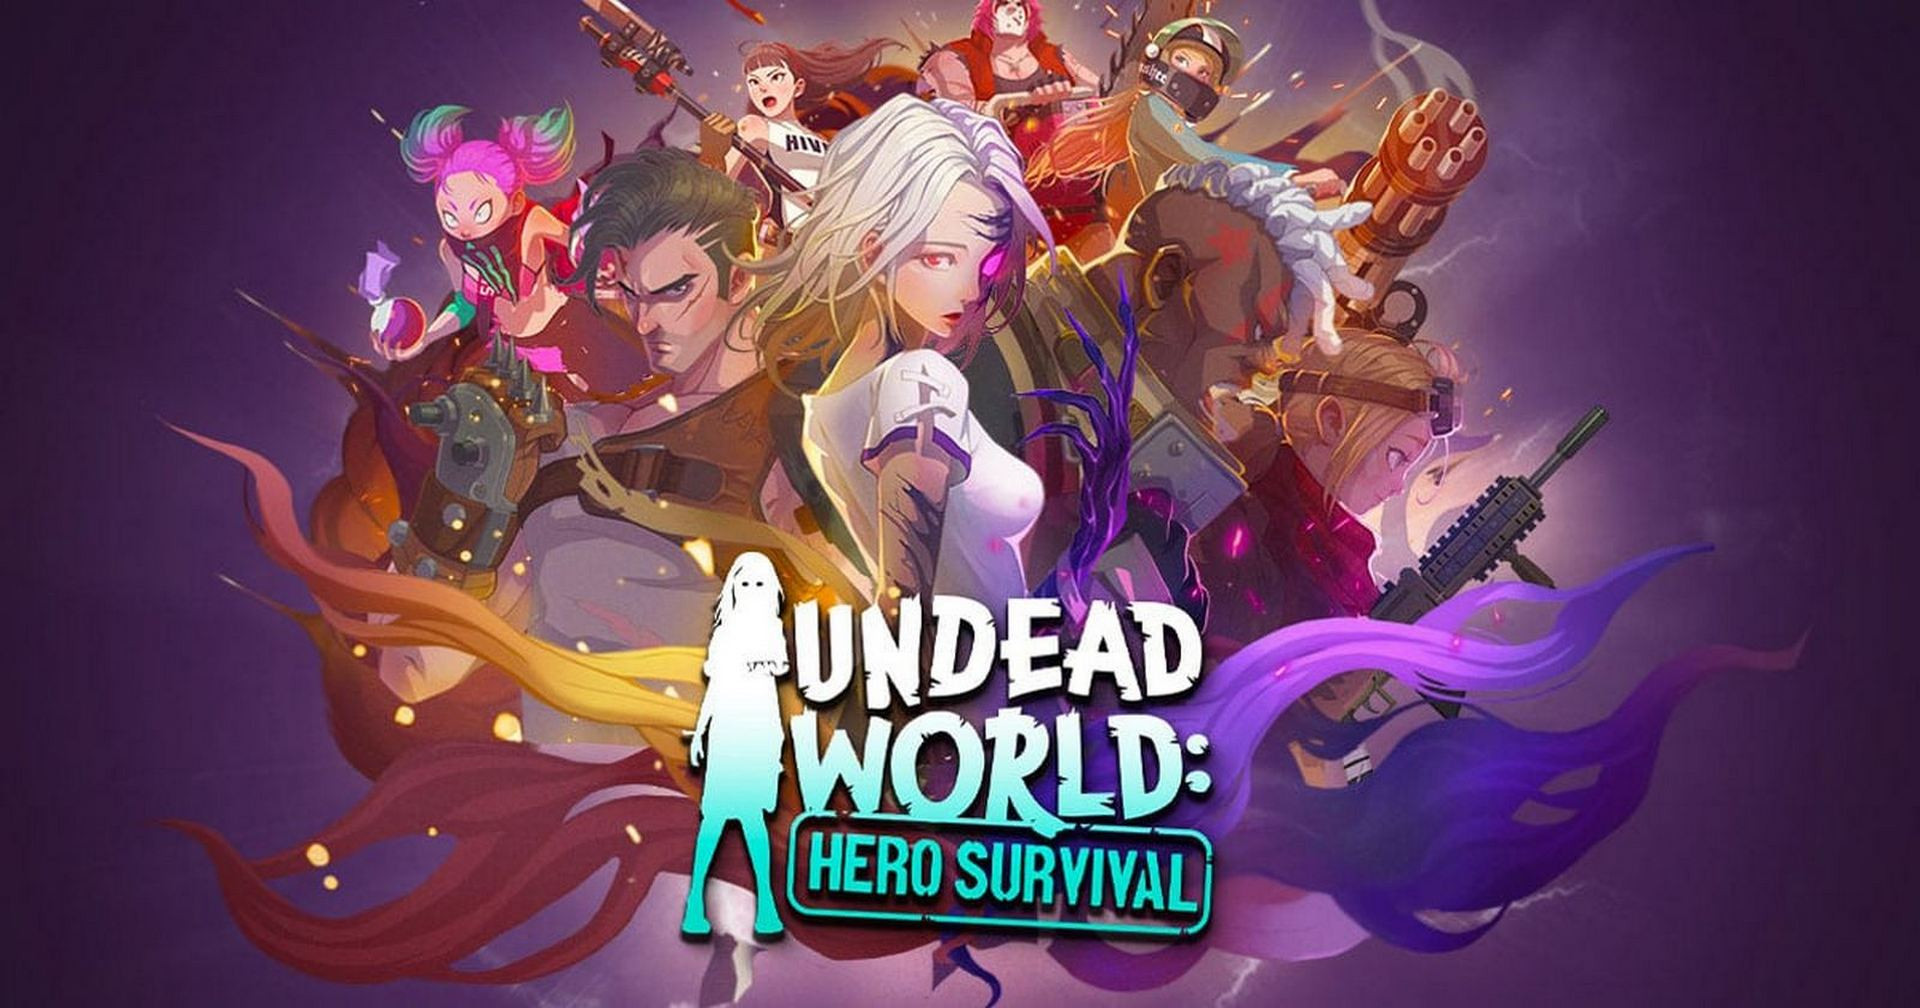 World was hero. Undead World Hero Survival. Undead World Hero Survival коды. Undead World русификатор.